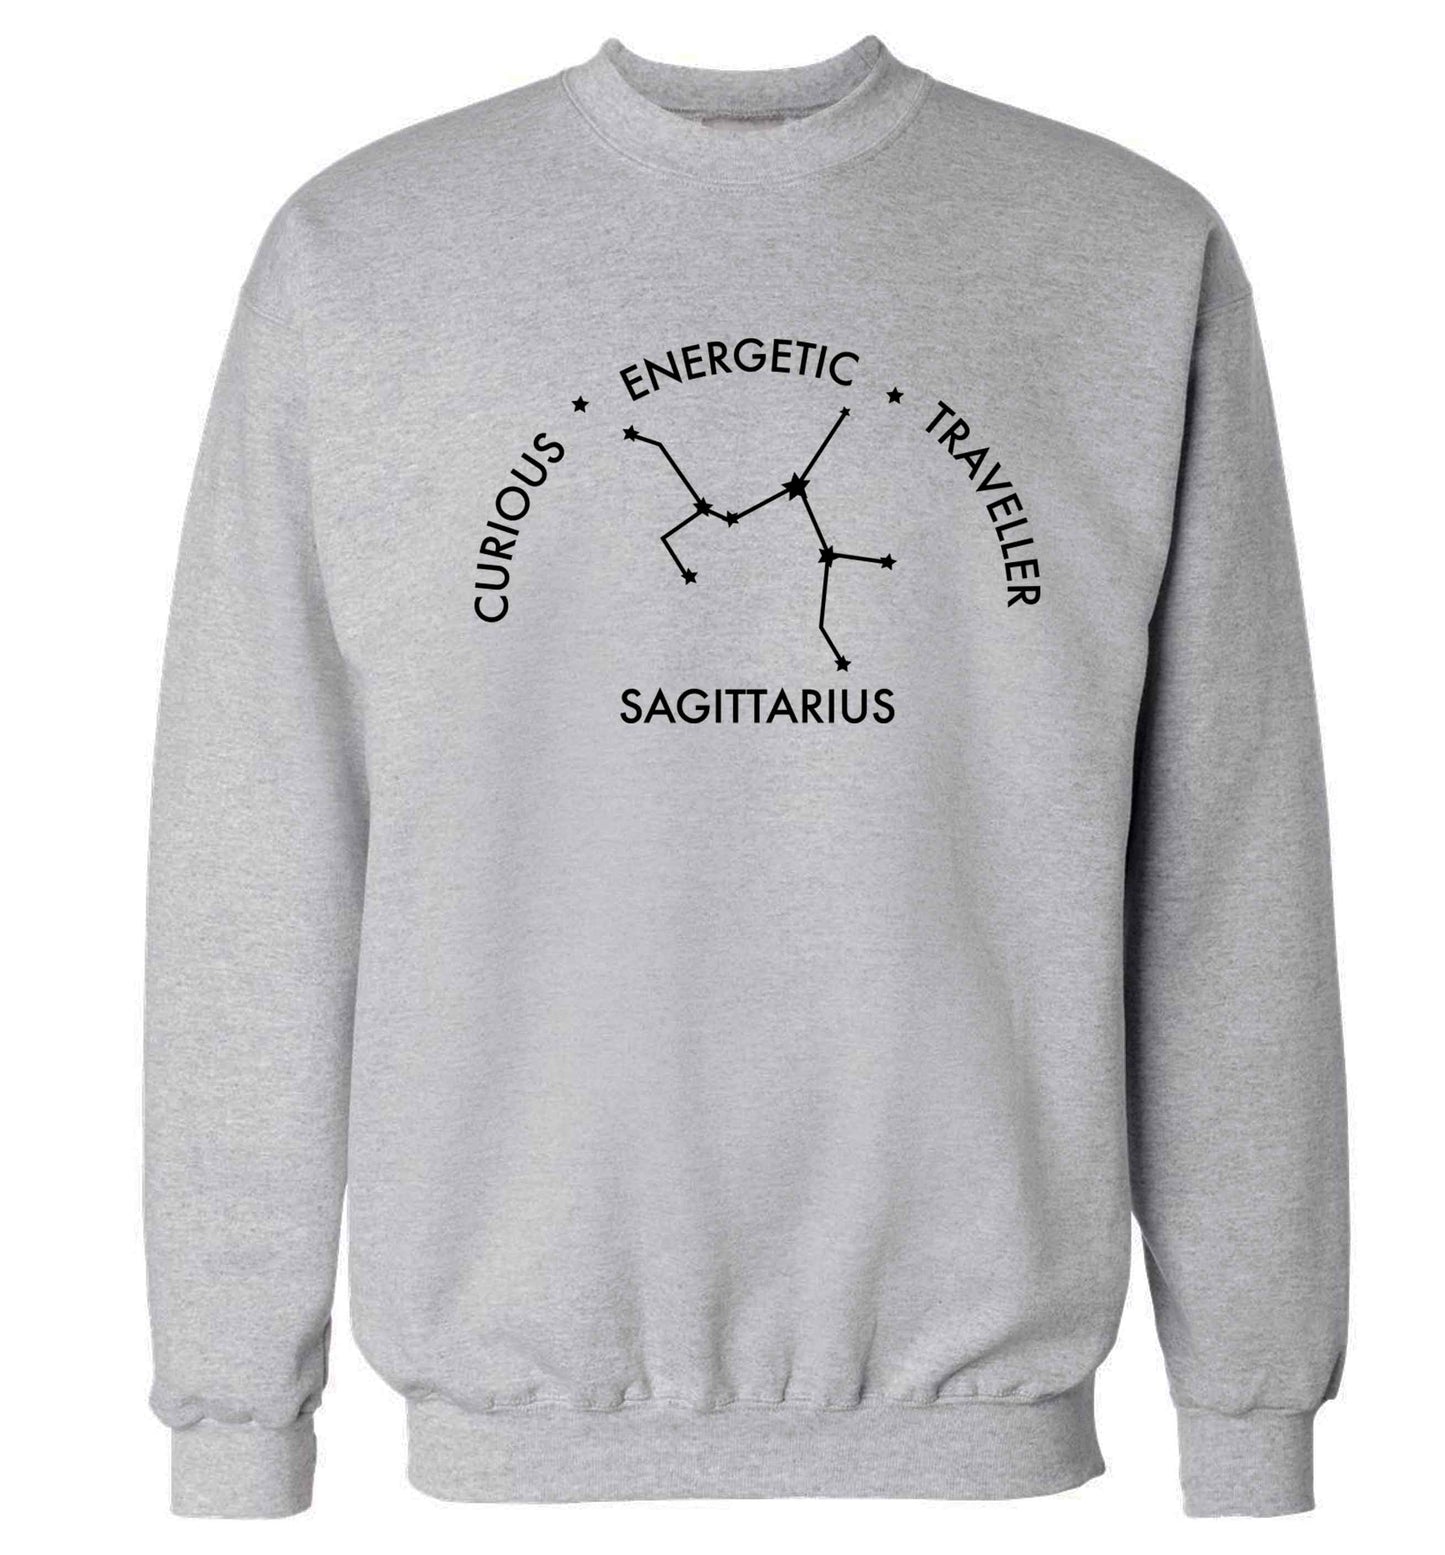 Sagittarius, curious, energetic, traveller Adult's unisex grey Sweater 2XL